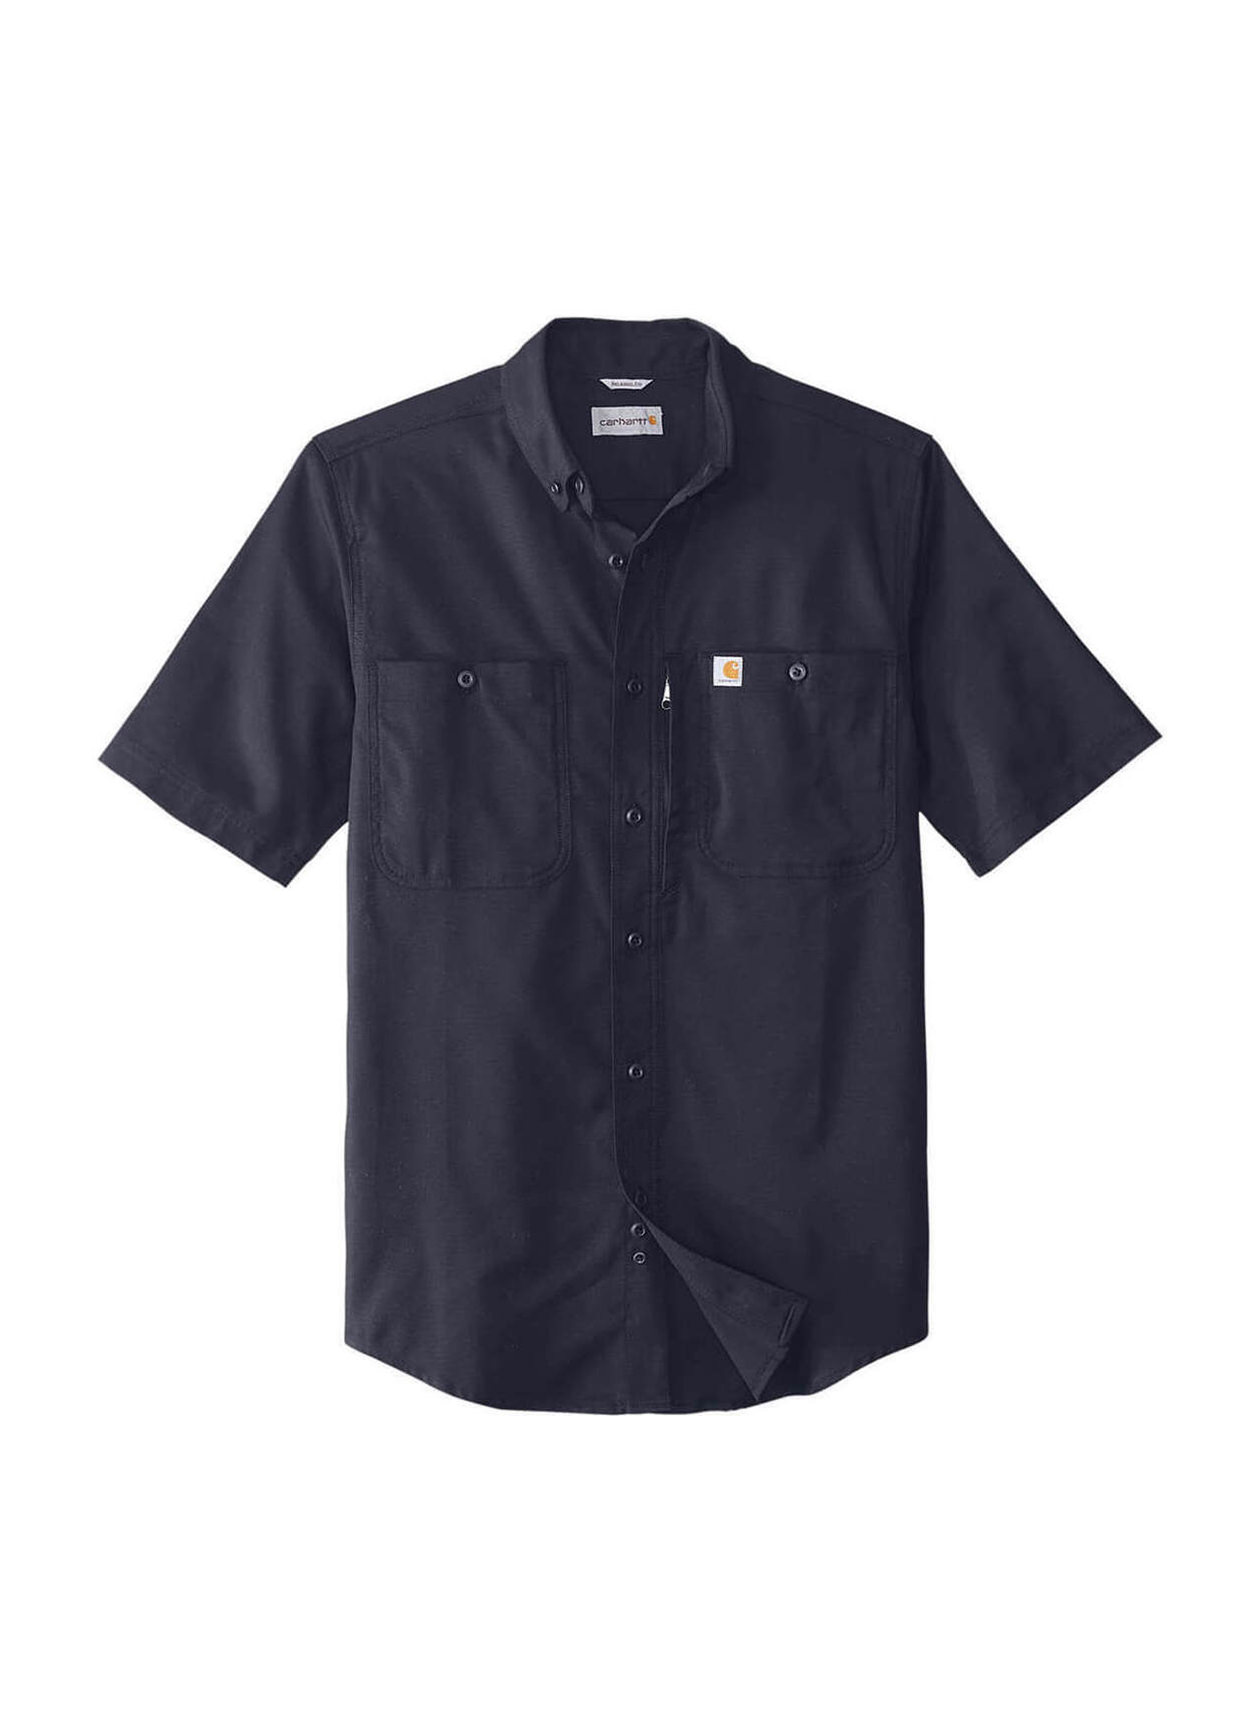 SHIMANO WORK SHIRT Medium Mens Blue Short Sleeve Button Up Pockets